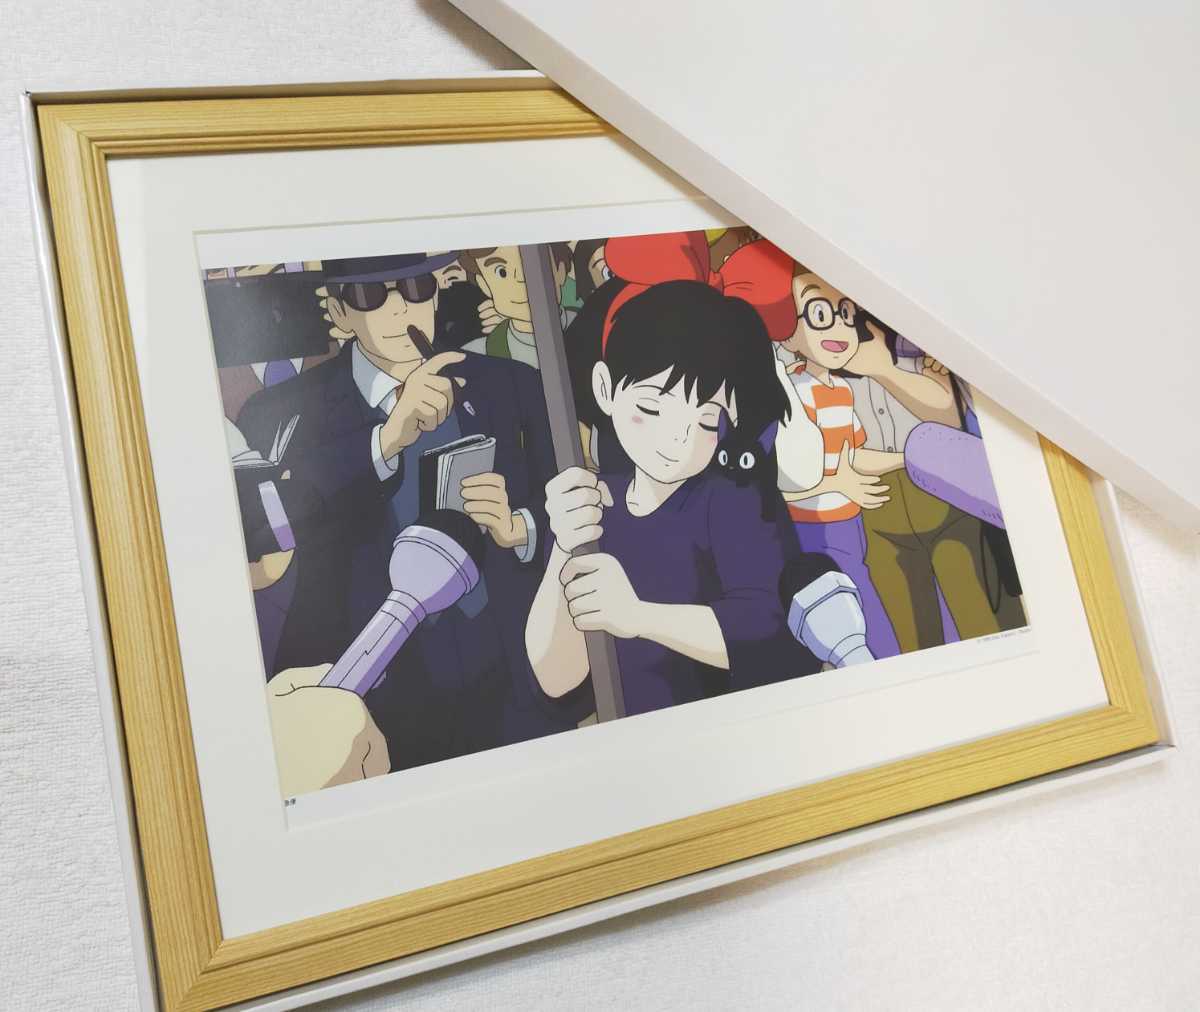 Super rare! Studio Ghibli Kiki's Delivery Service [Framed Item] Ghibli Poster Ghibli Calendar Inspection) Ghibli Painting Reproduction Original Postcard. Hayao Miyazaki, Ma line, Kiki's Delivery Service, others